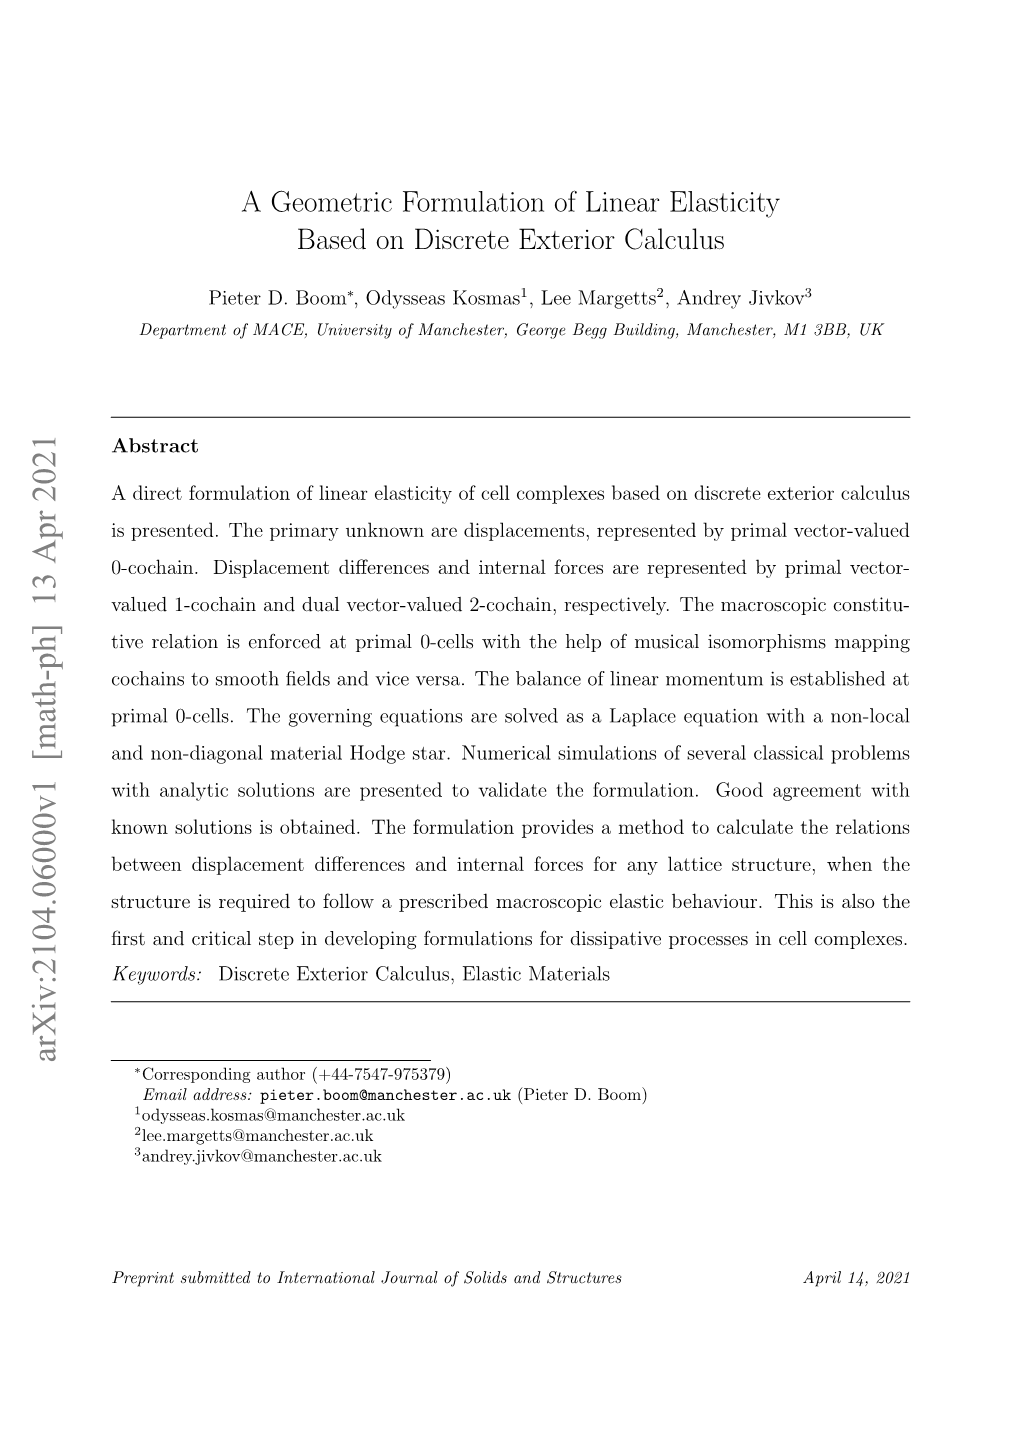 A Geometric Formulation of Linear Elasticity Based on Discrete Exterior Calculus